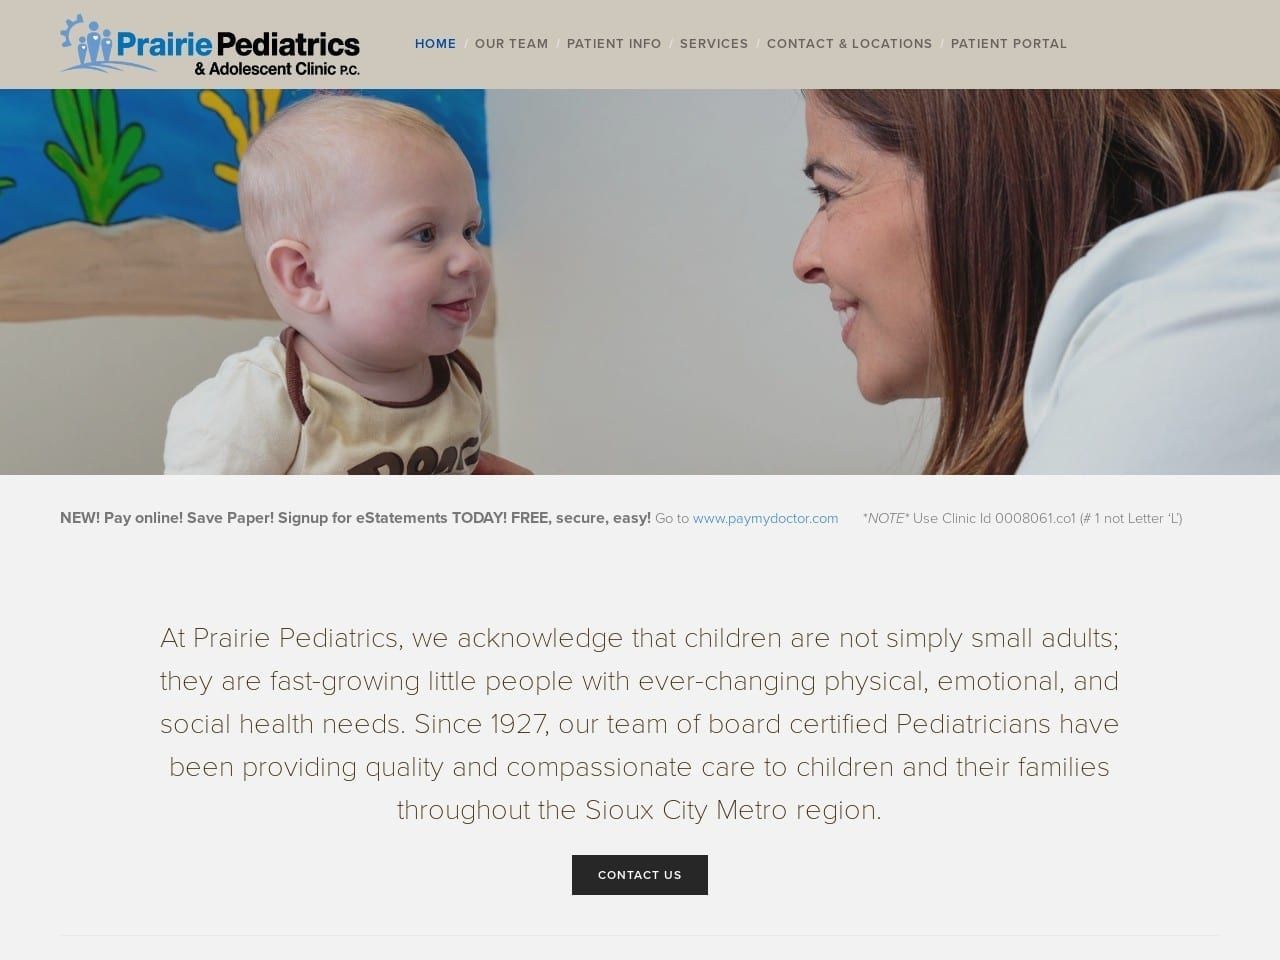 Prairie Pediatrics & Adlscnt Kampfe Mark I DDS Website Screenshot from prairiepediatrics.com